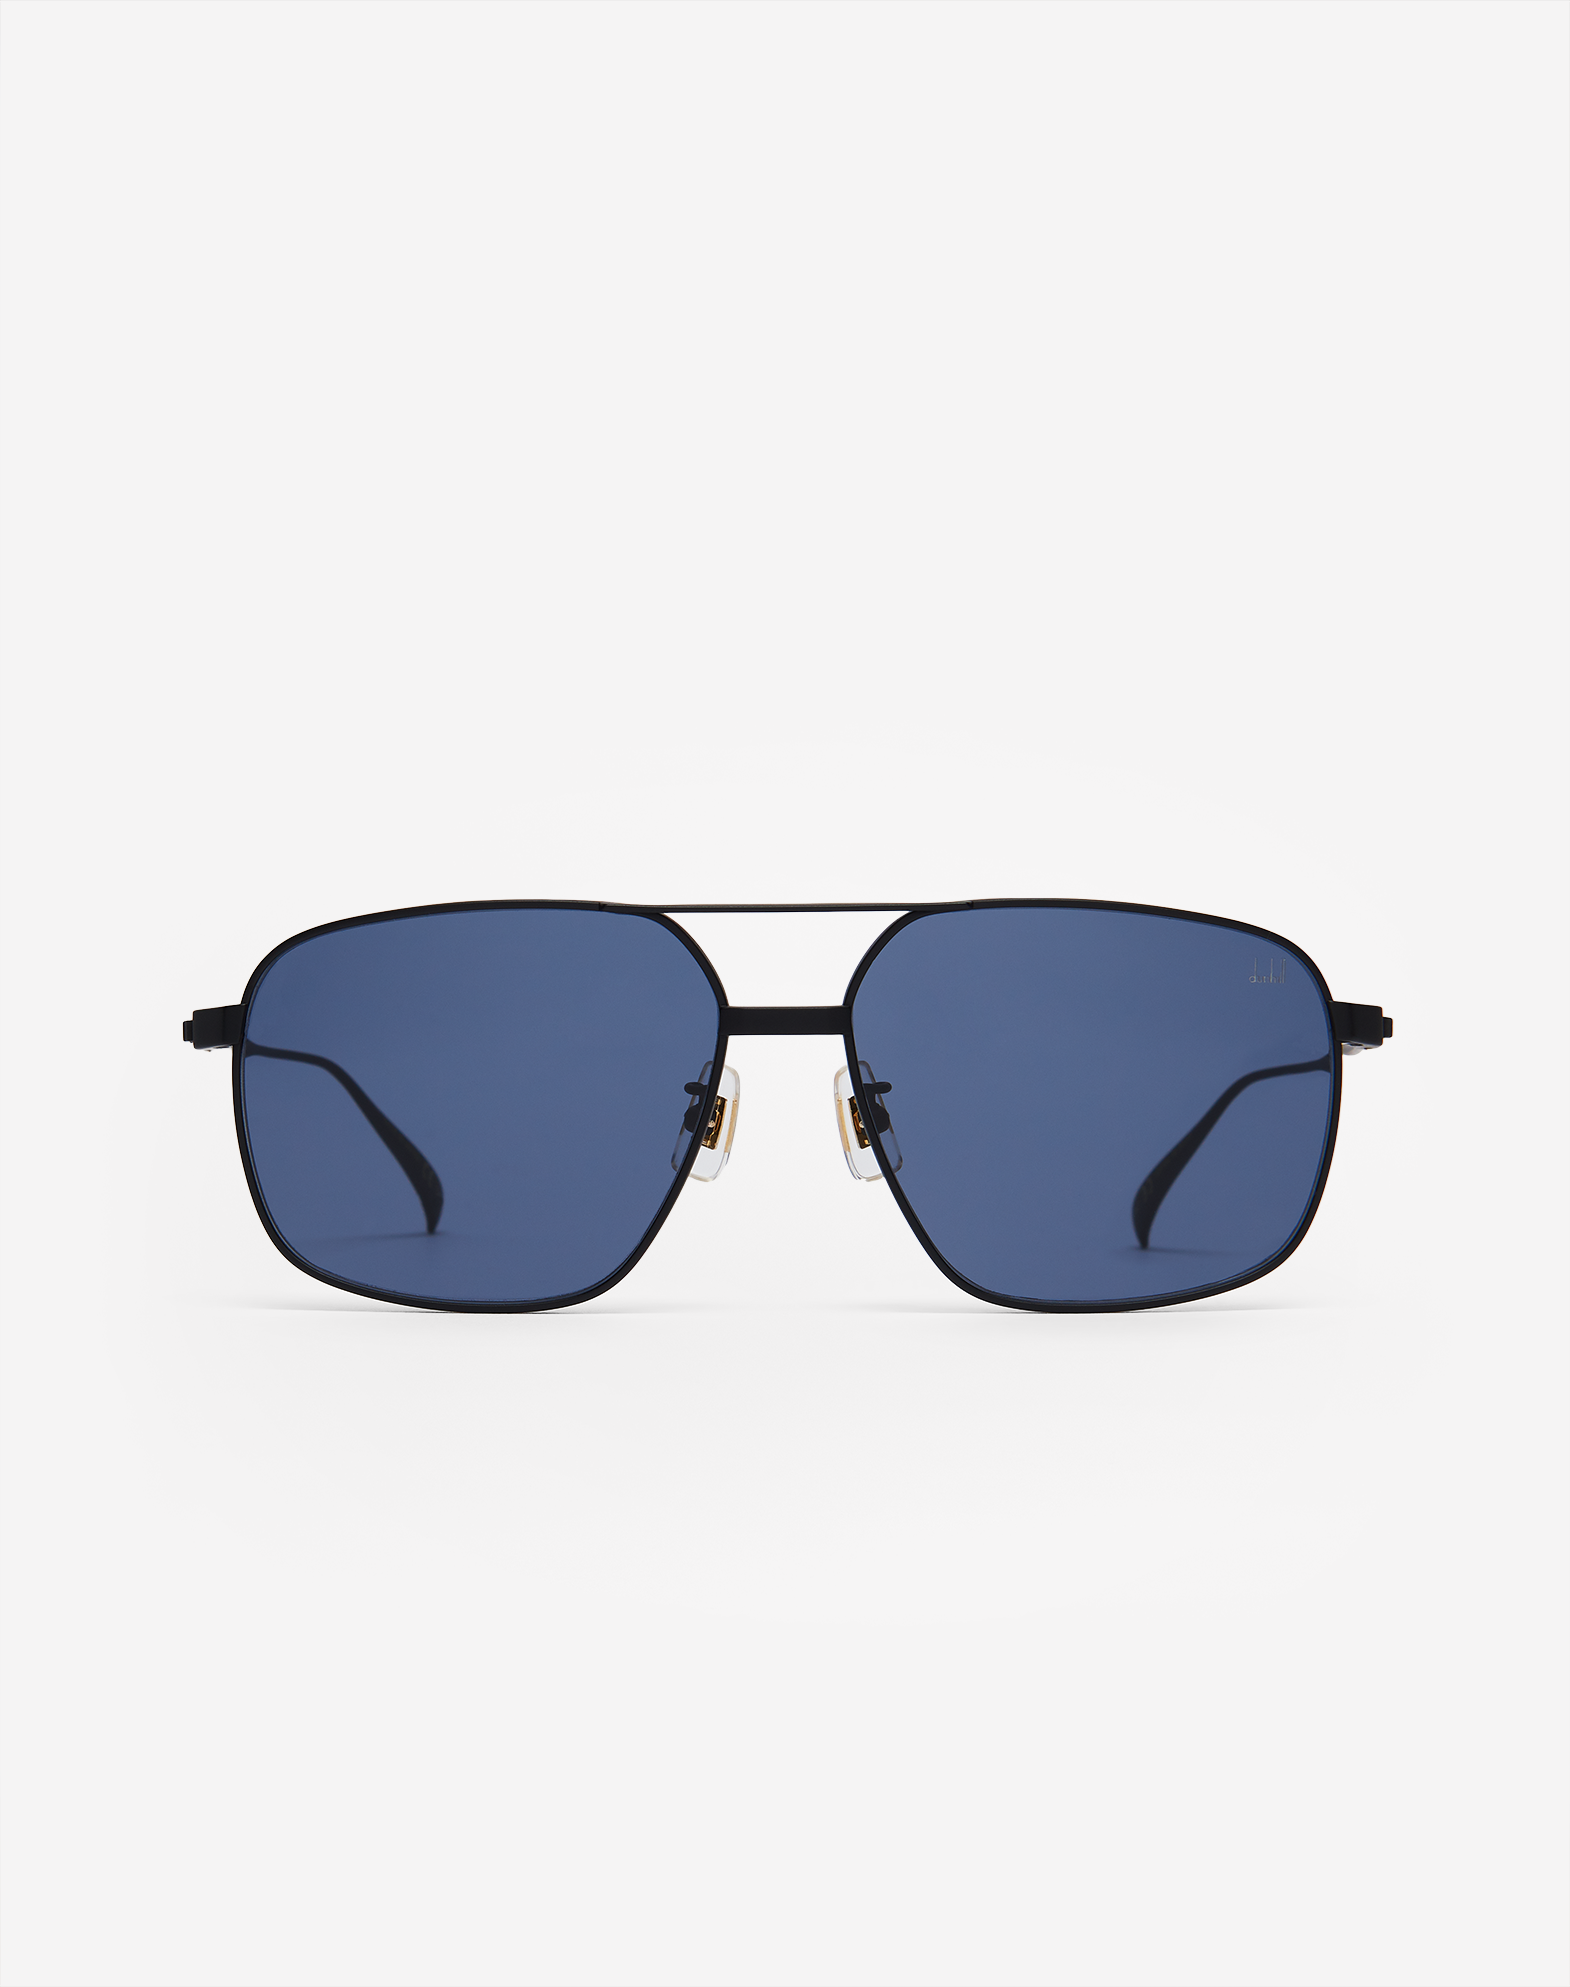 Dunhill Luxury Men's Sunglasses